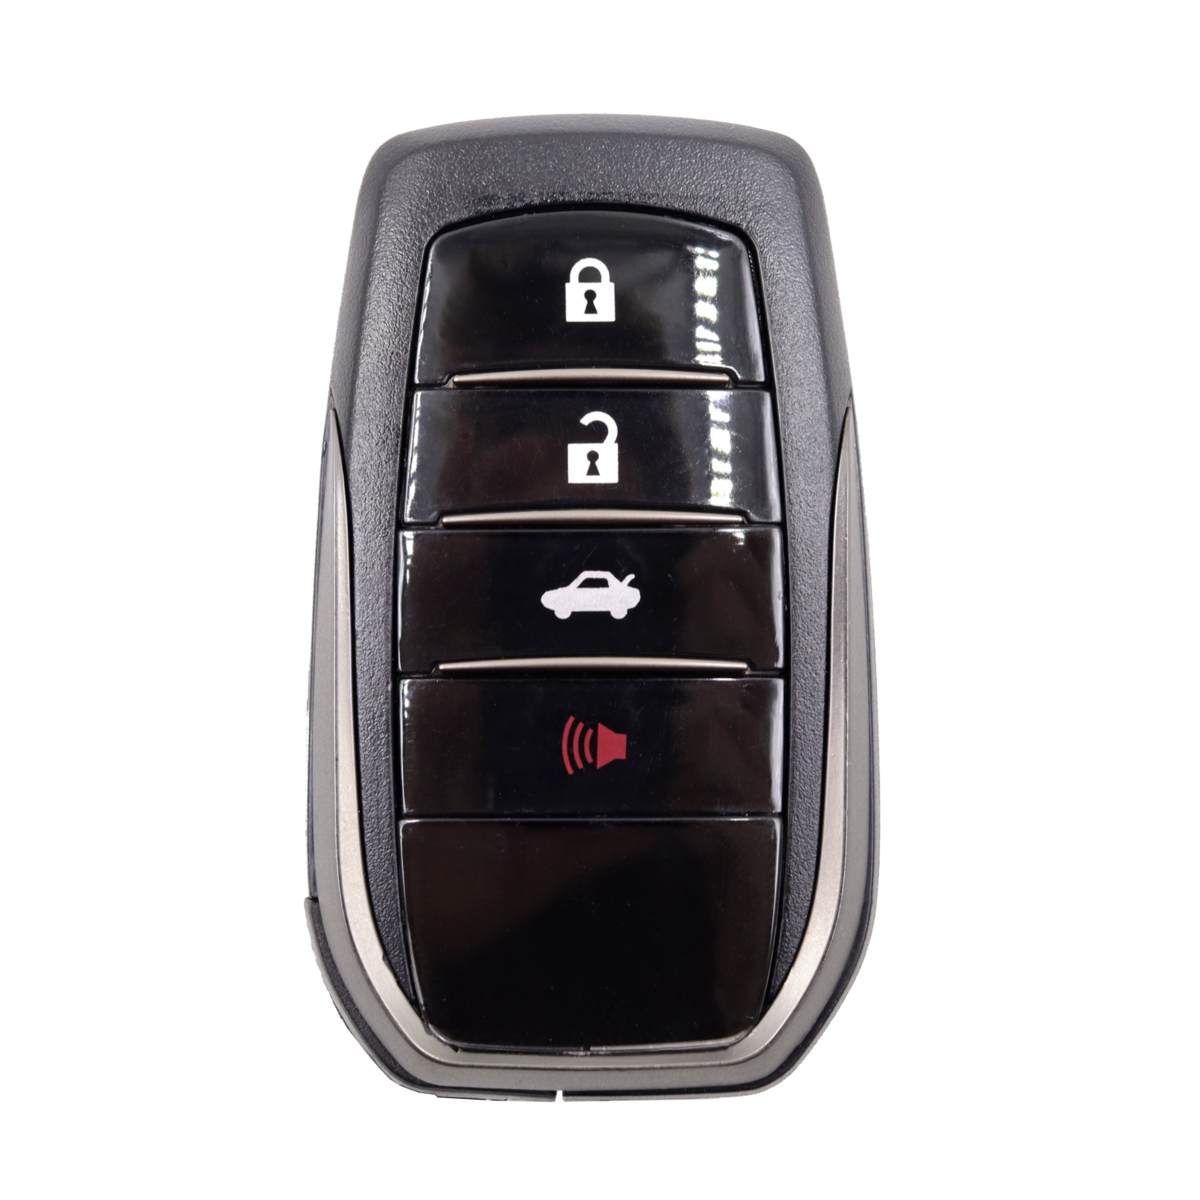 Toyota Compatible 4 button smart remote Housing